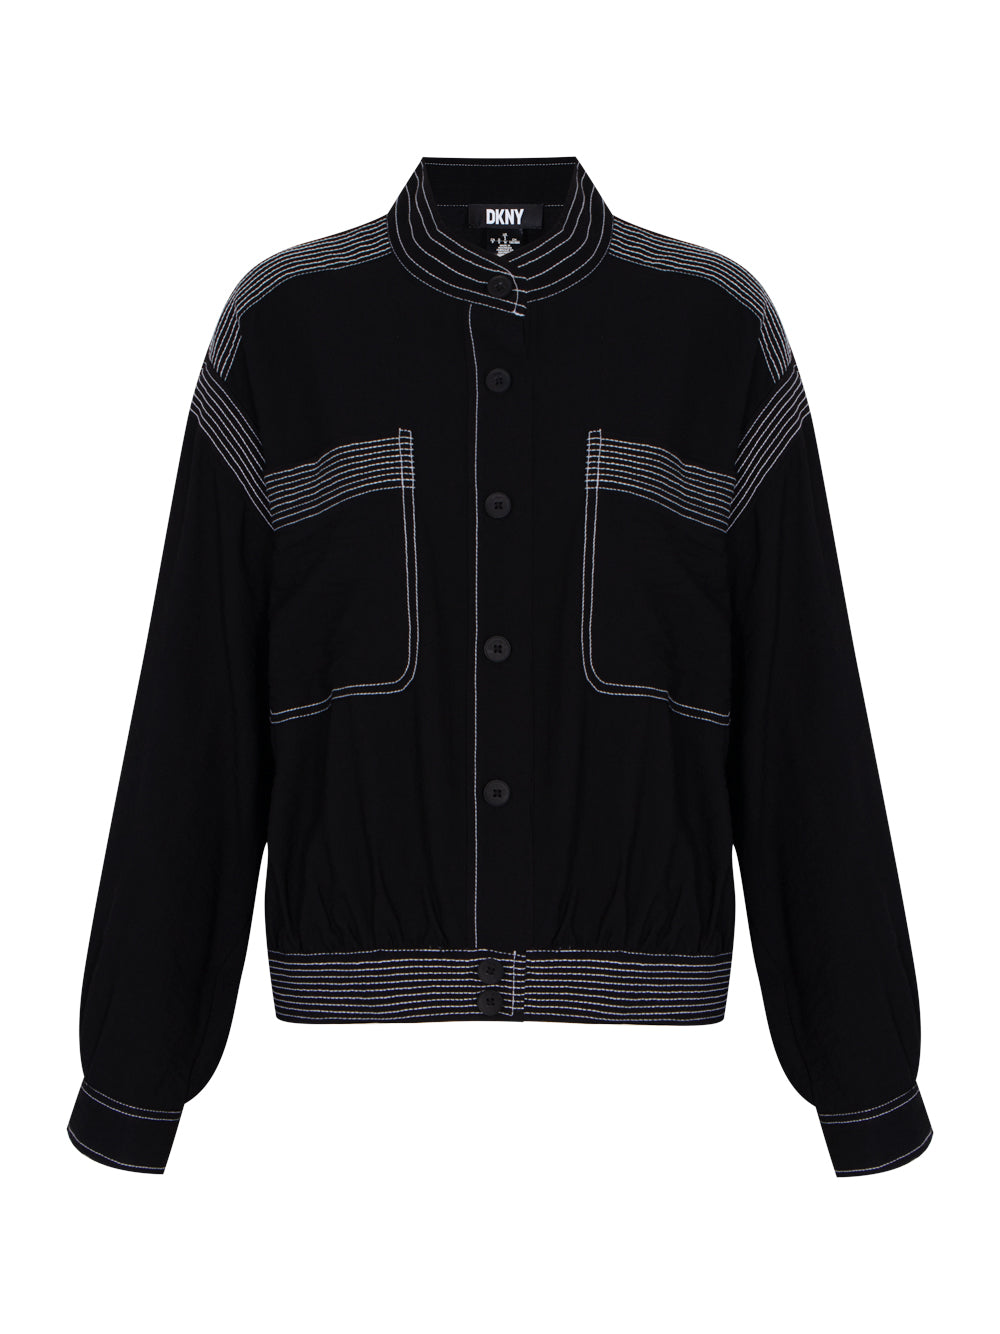 Long Sleeve Contrast Stitching Jacket (Black)